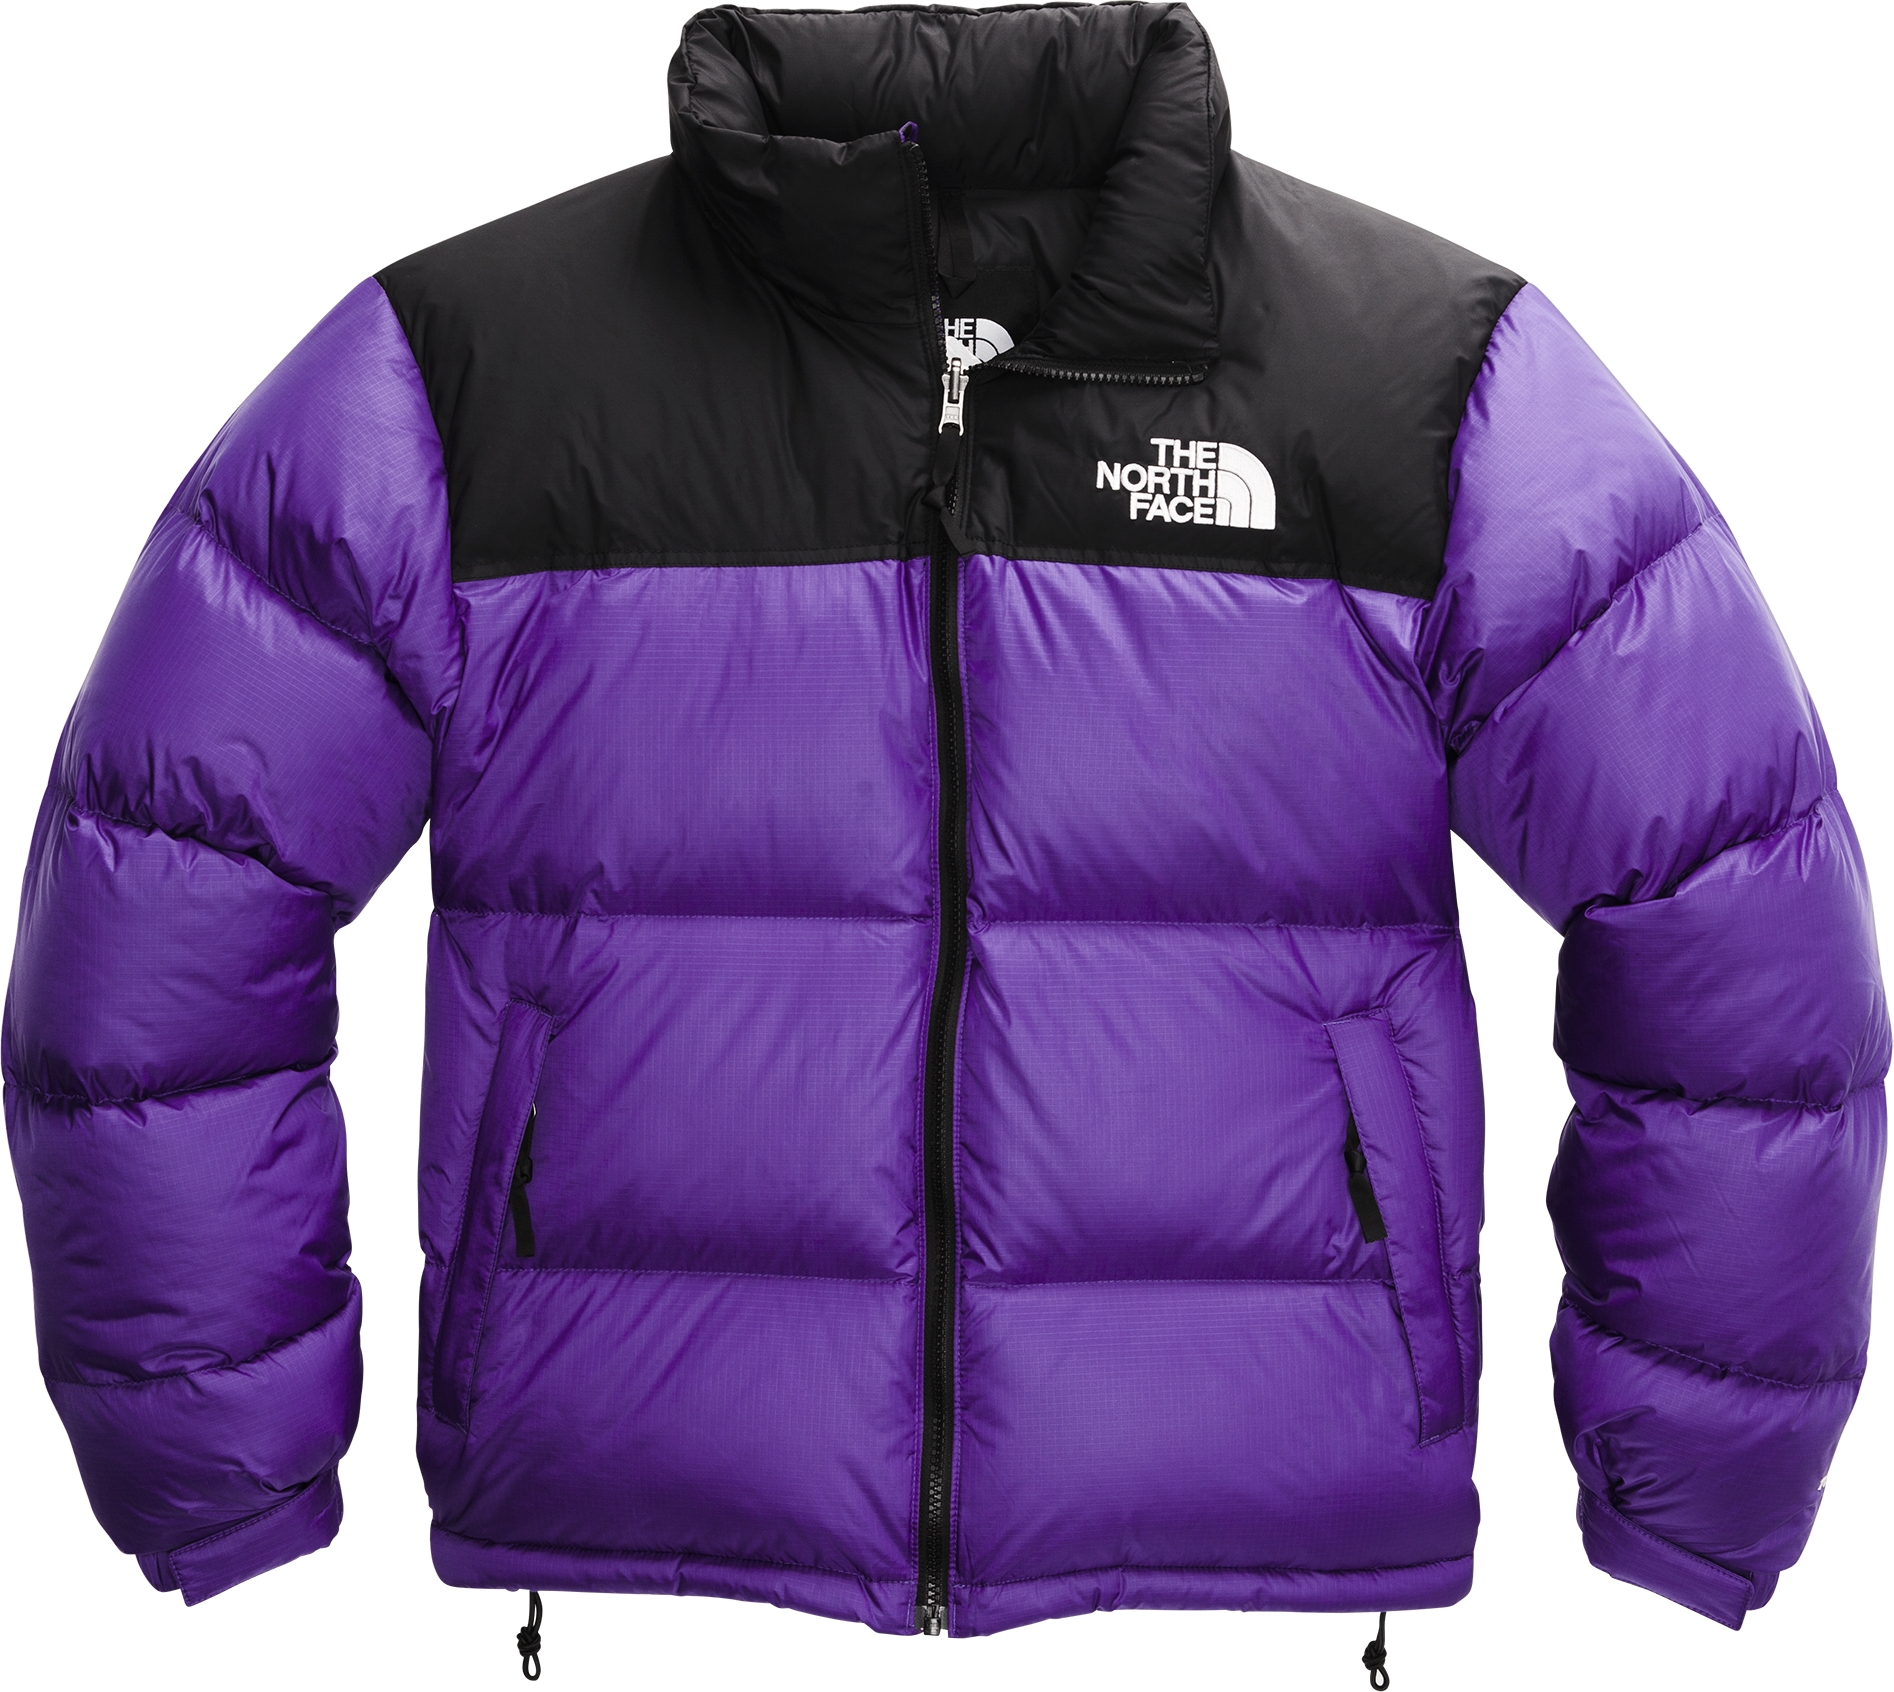 المشعة مشترك طوف The North Face Puffer Jacket Purple 14thbrooklyn Org